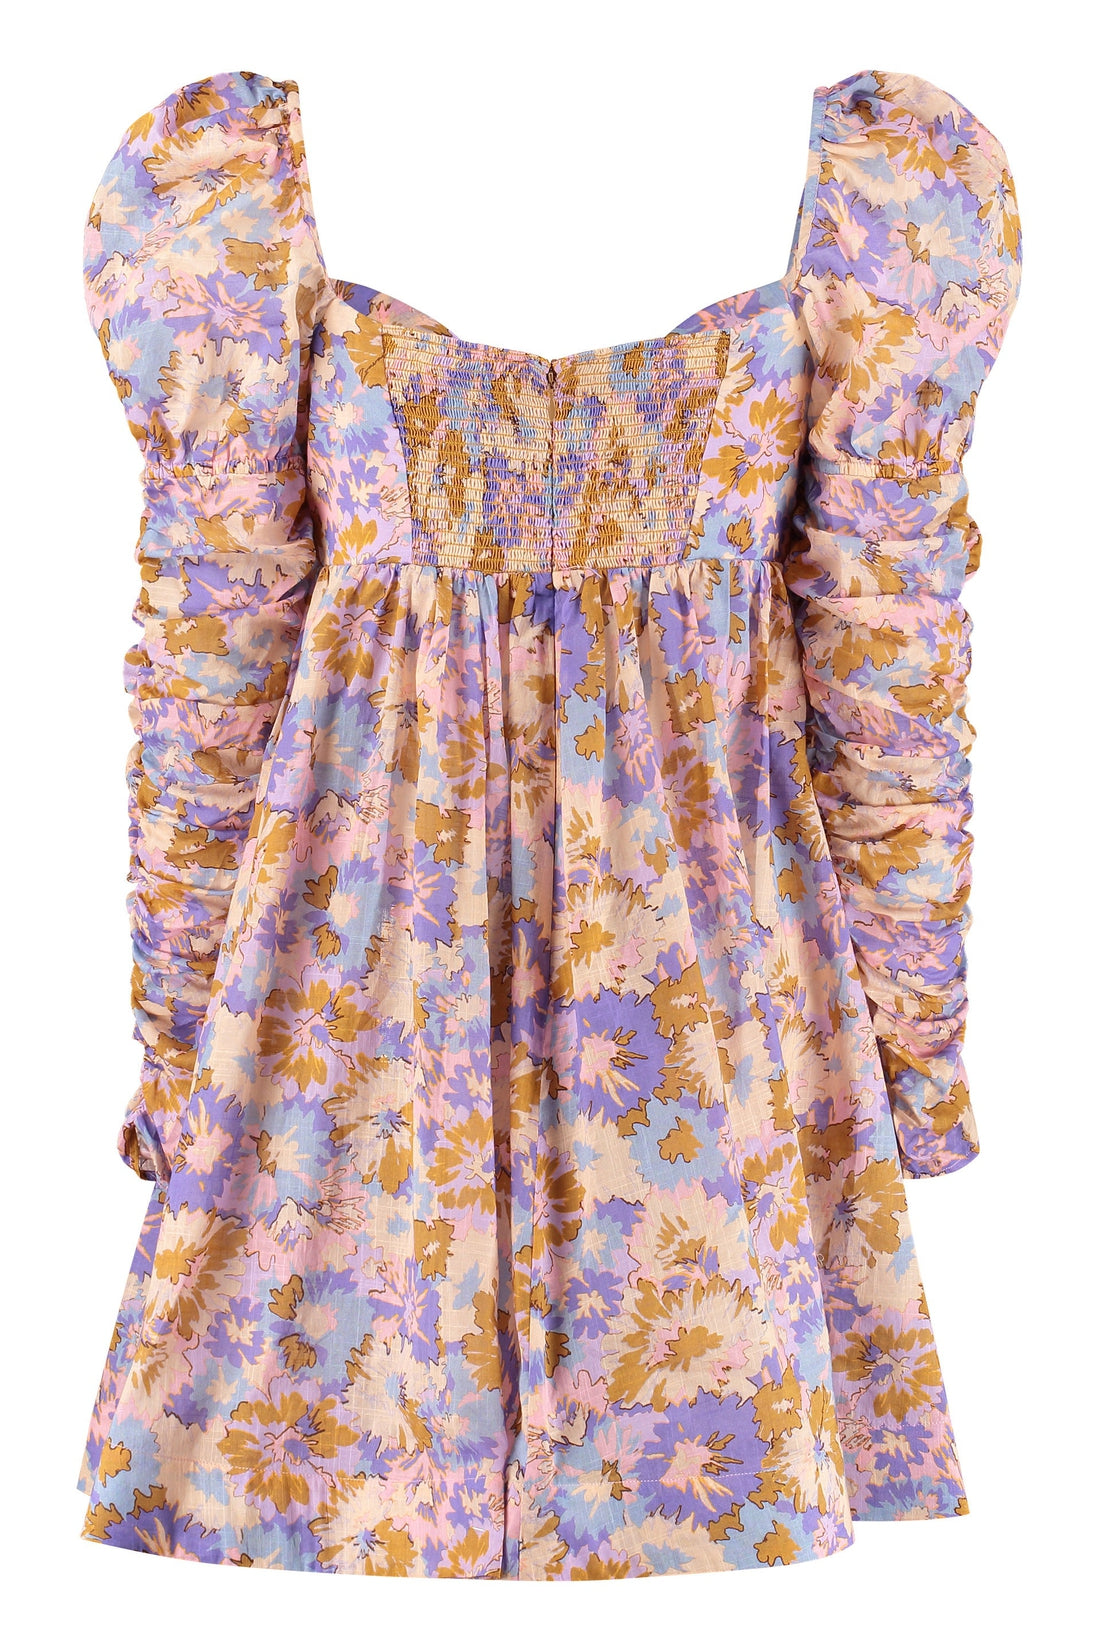 Zimmermann-OUTLET-SALE-Violet Dress with floral print-ARCHIVIST